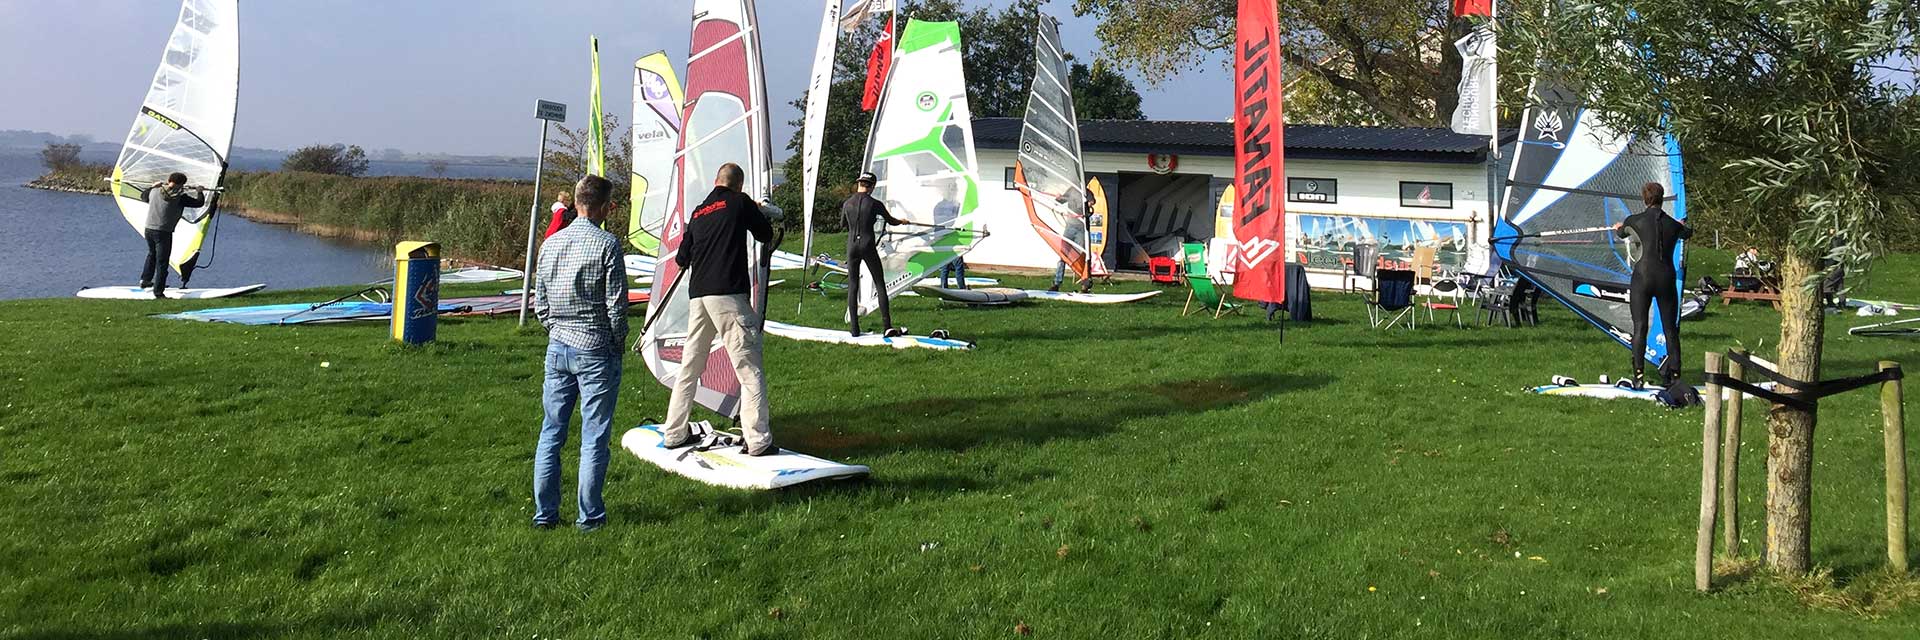 windsurf clinic oefenen